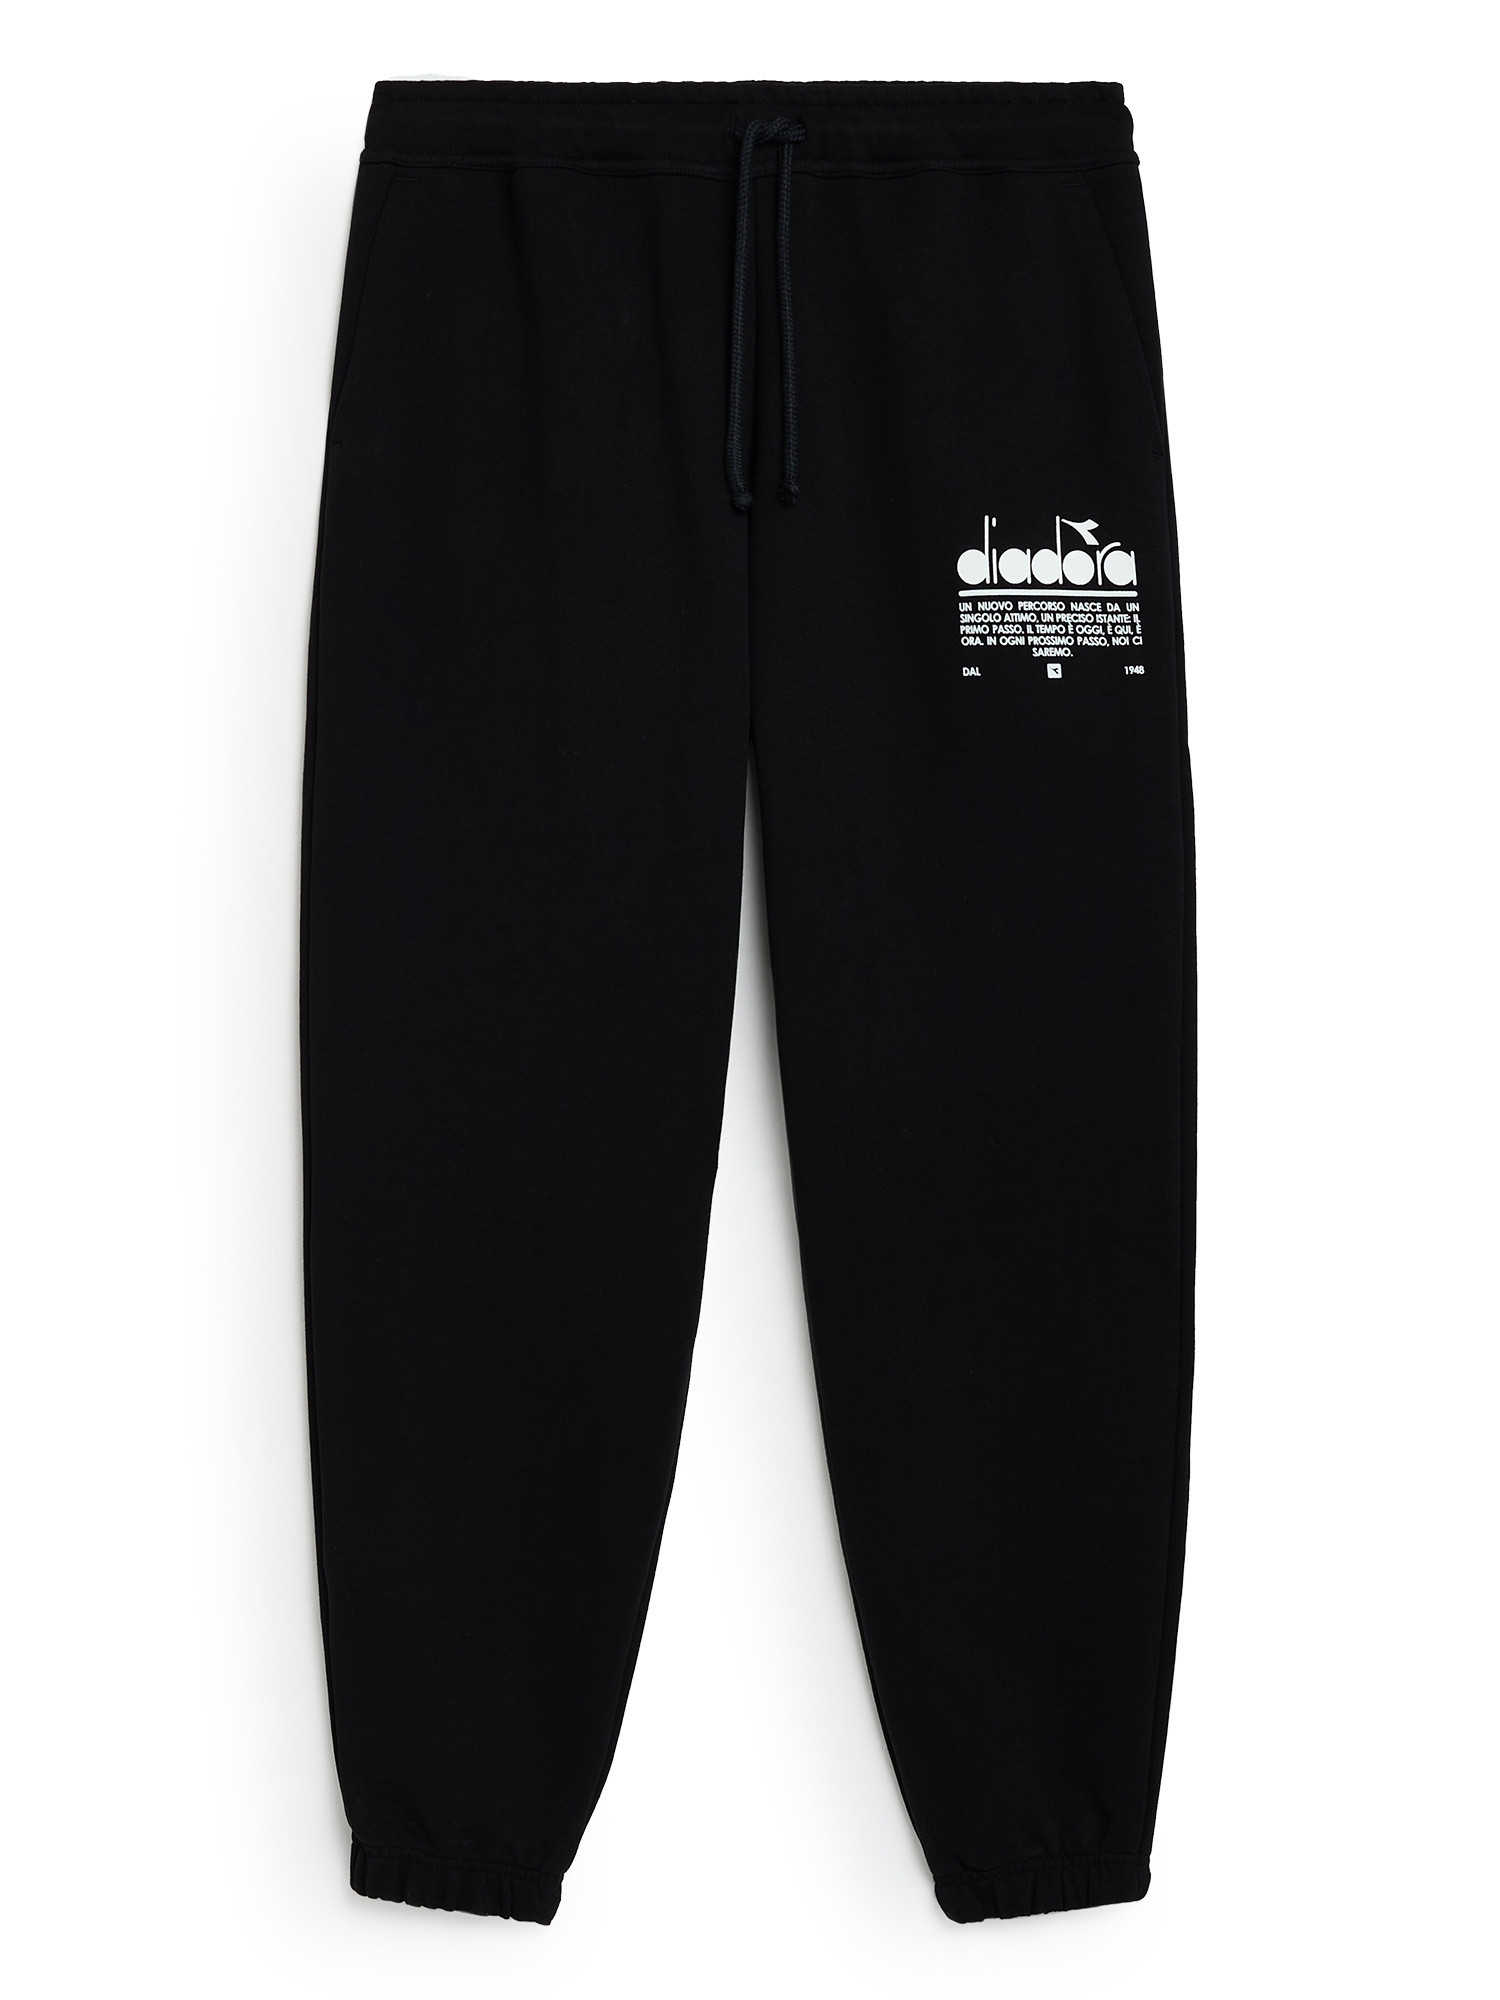 Diadora - Manifesto sports trousers with cotton print, Black, large